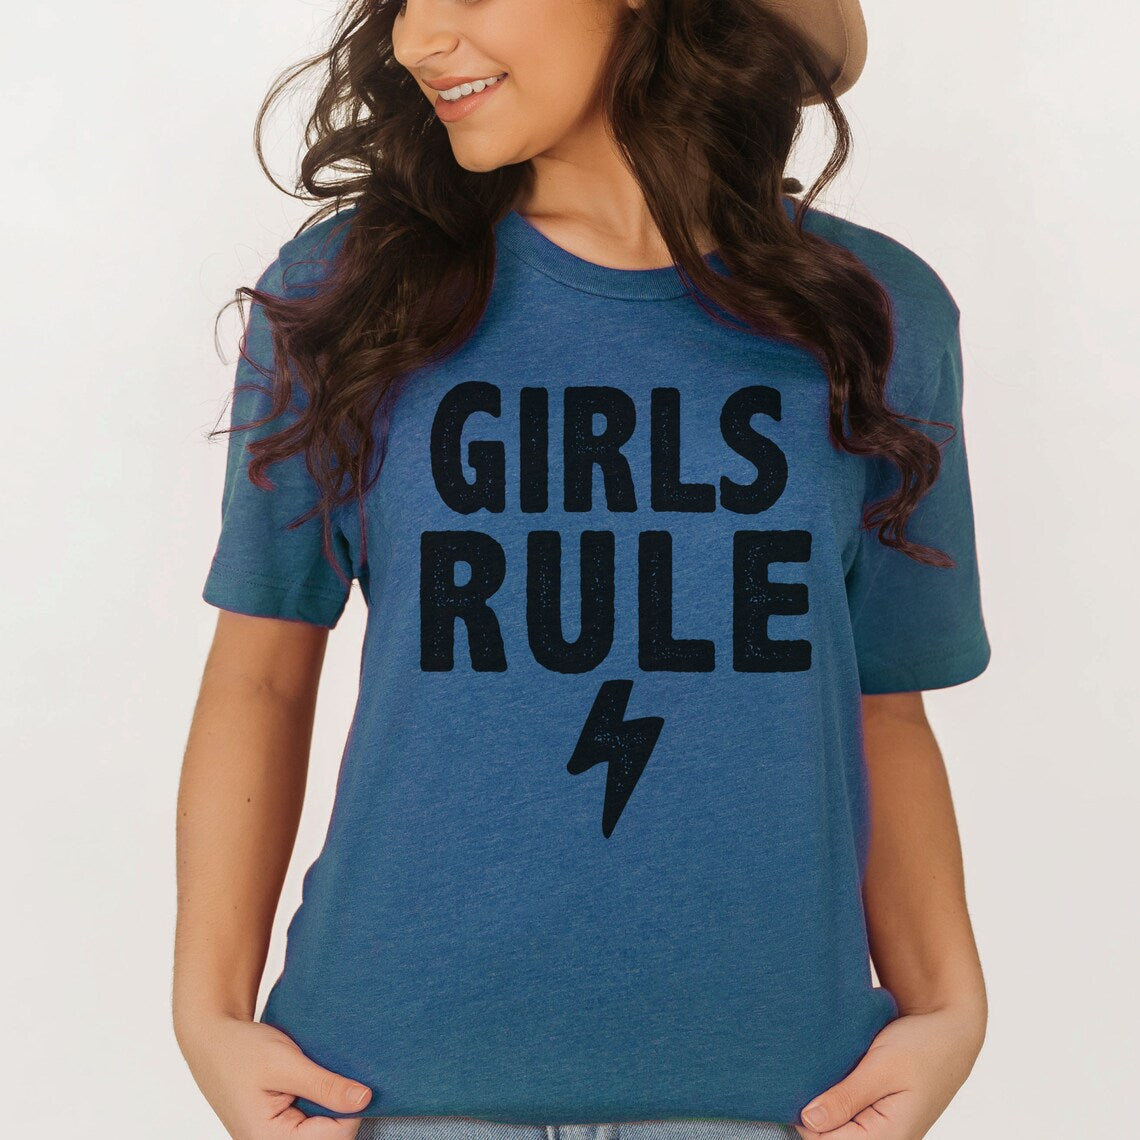 Fun and Sarcastic T-Shirt | Girls Rule T-Shirt | Girl Power T-Shirt | Boss T-Shirt | Females Rule T-Shirt